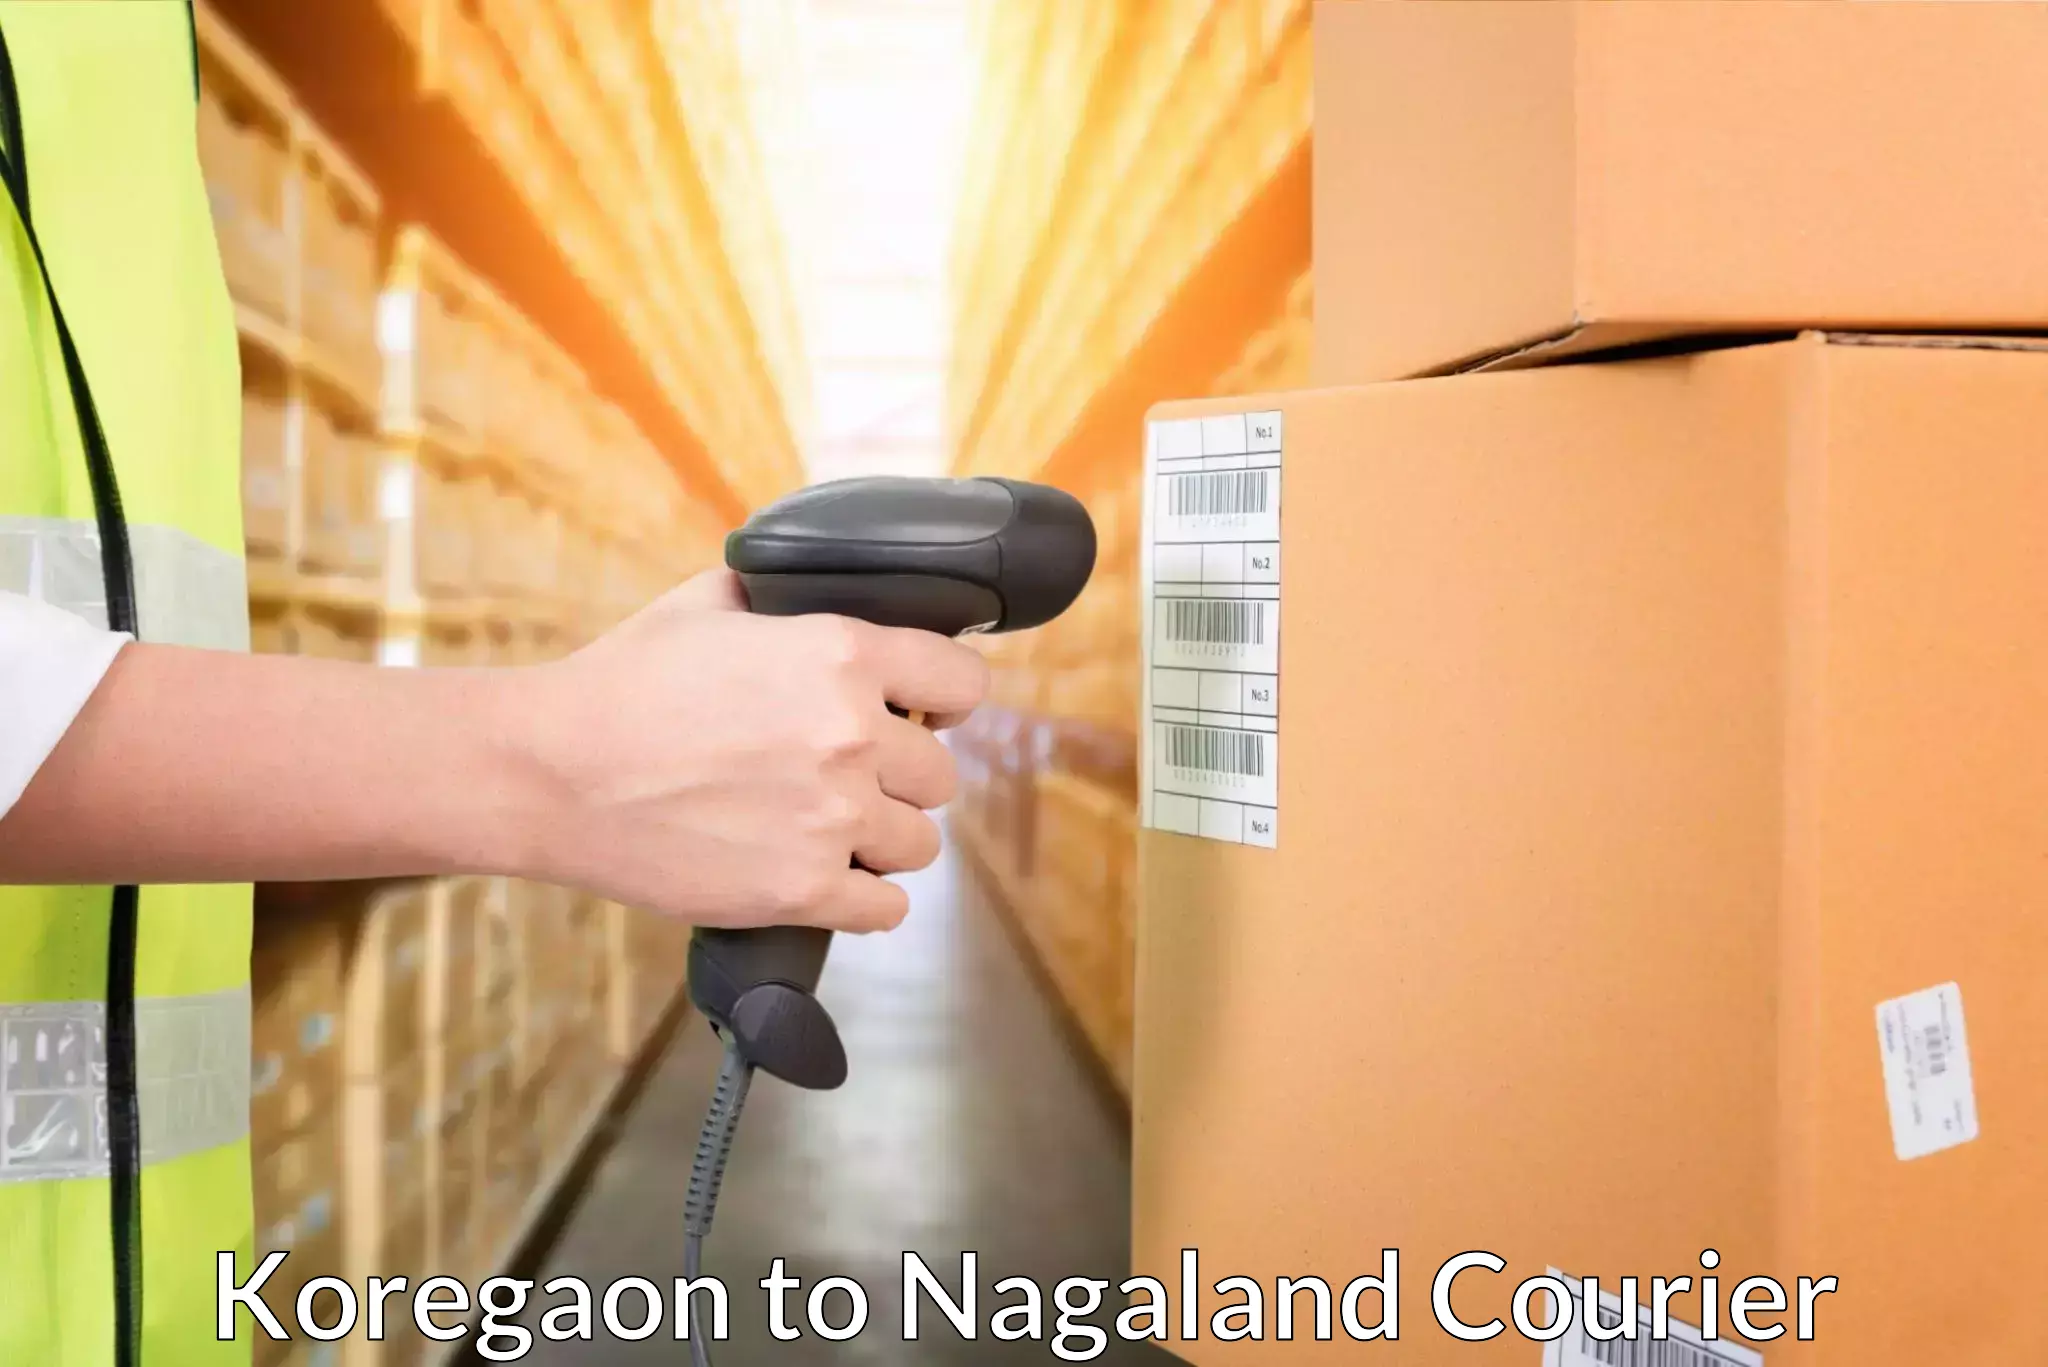 Courier service comparison Koregaon to Nagaland